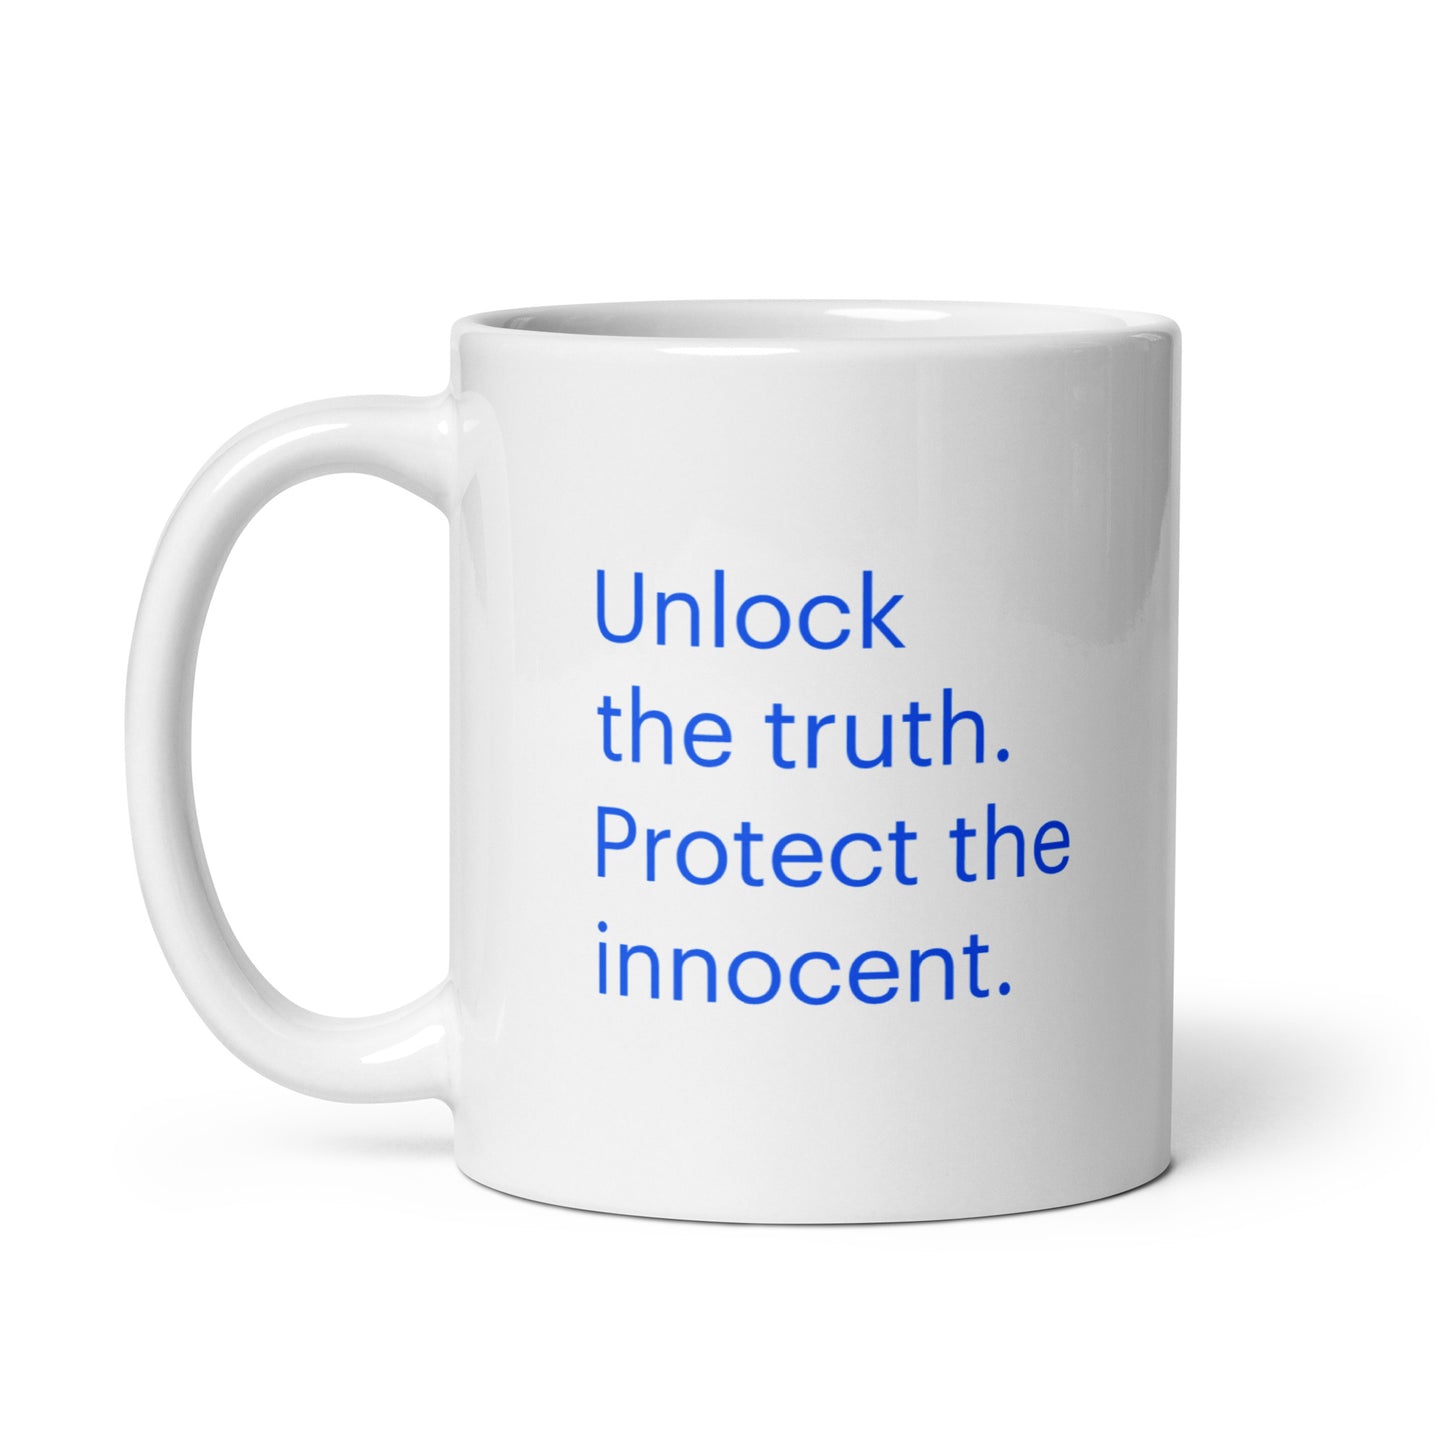 Unlock the truth | White glossy mug